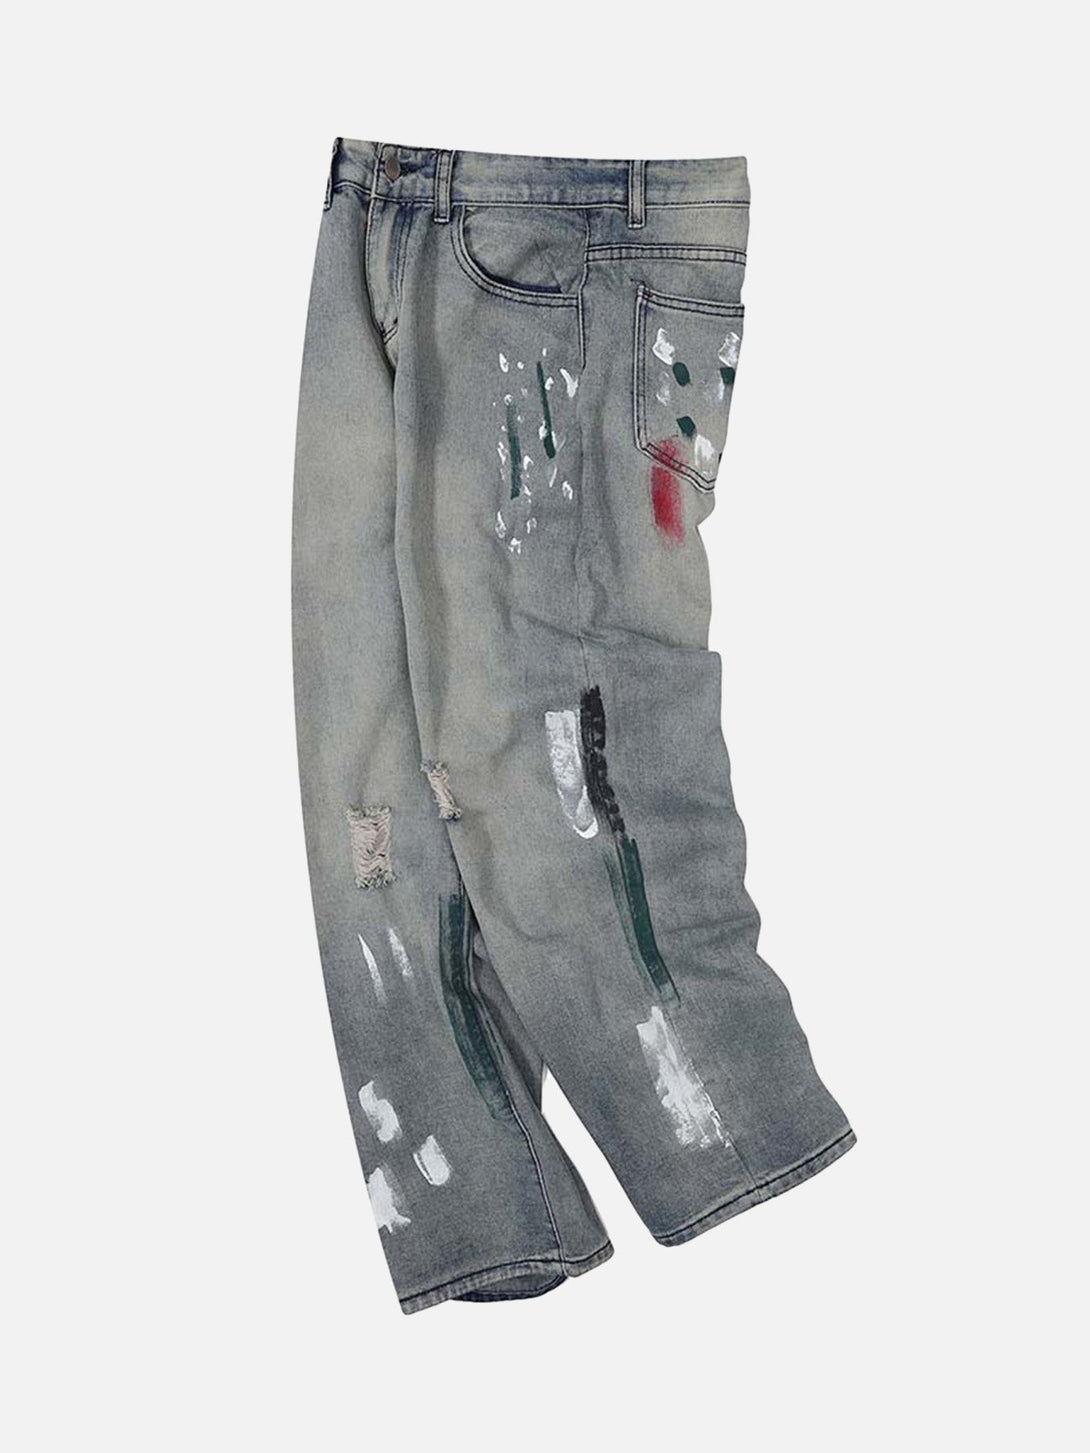 Majesda® - Vintage Ink Splash Washed And Distressed Jeans- Outfit Ideas - Streetwear Fashion - majesda.com